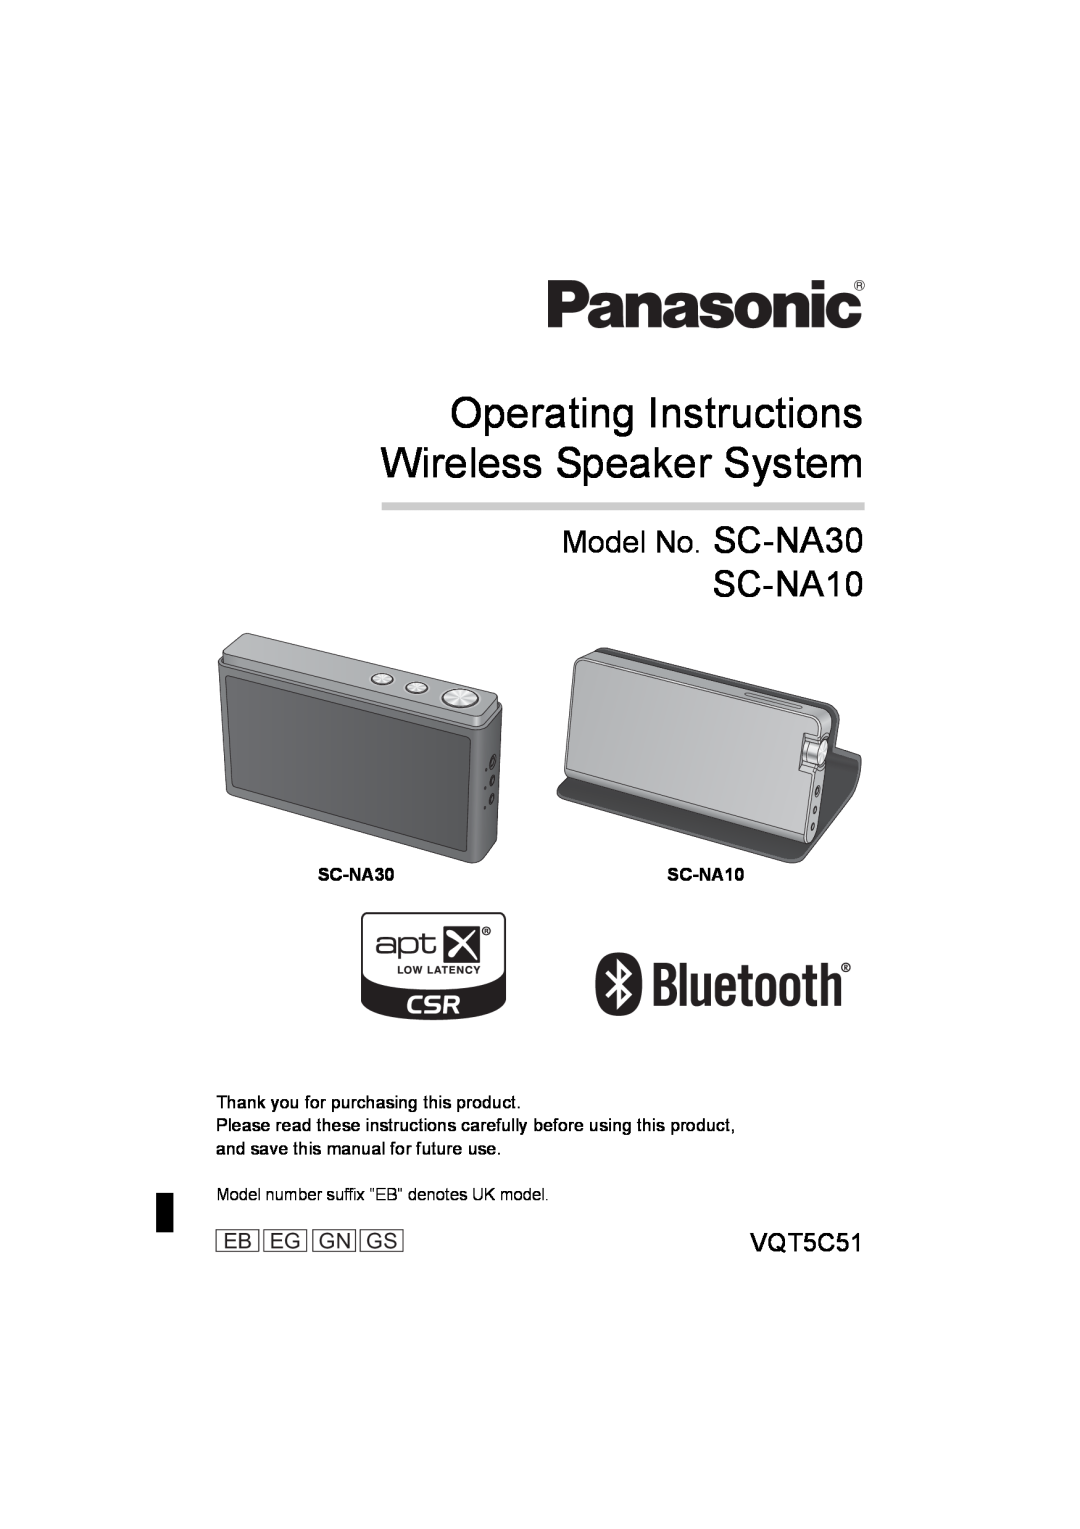 Panasonic SC-NA30/SC-NA10 manual Operating Instructions Wireless Speaker System, Model No. SC-NA30, VQT5C51 